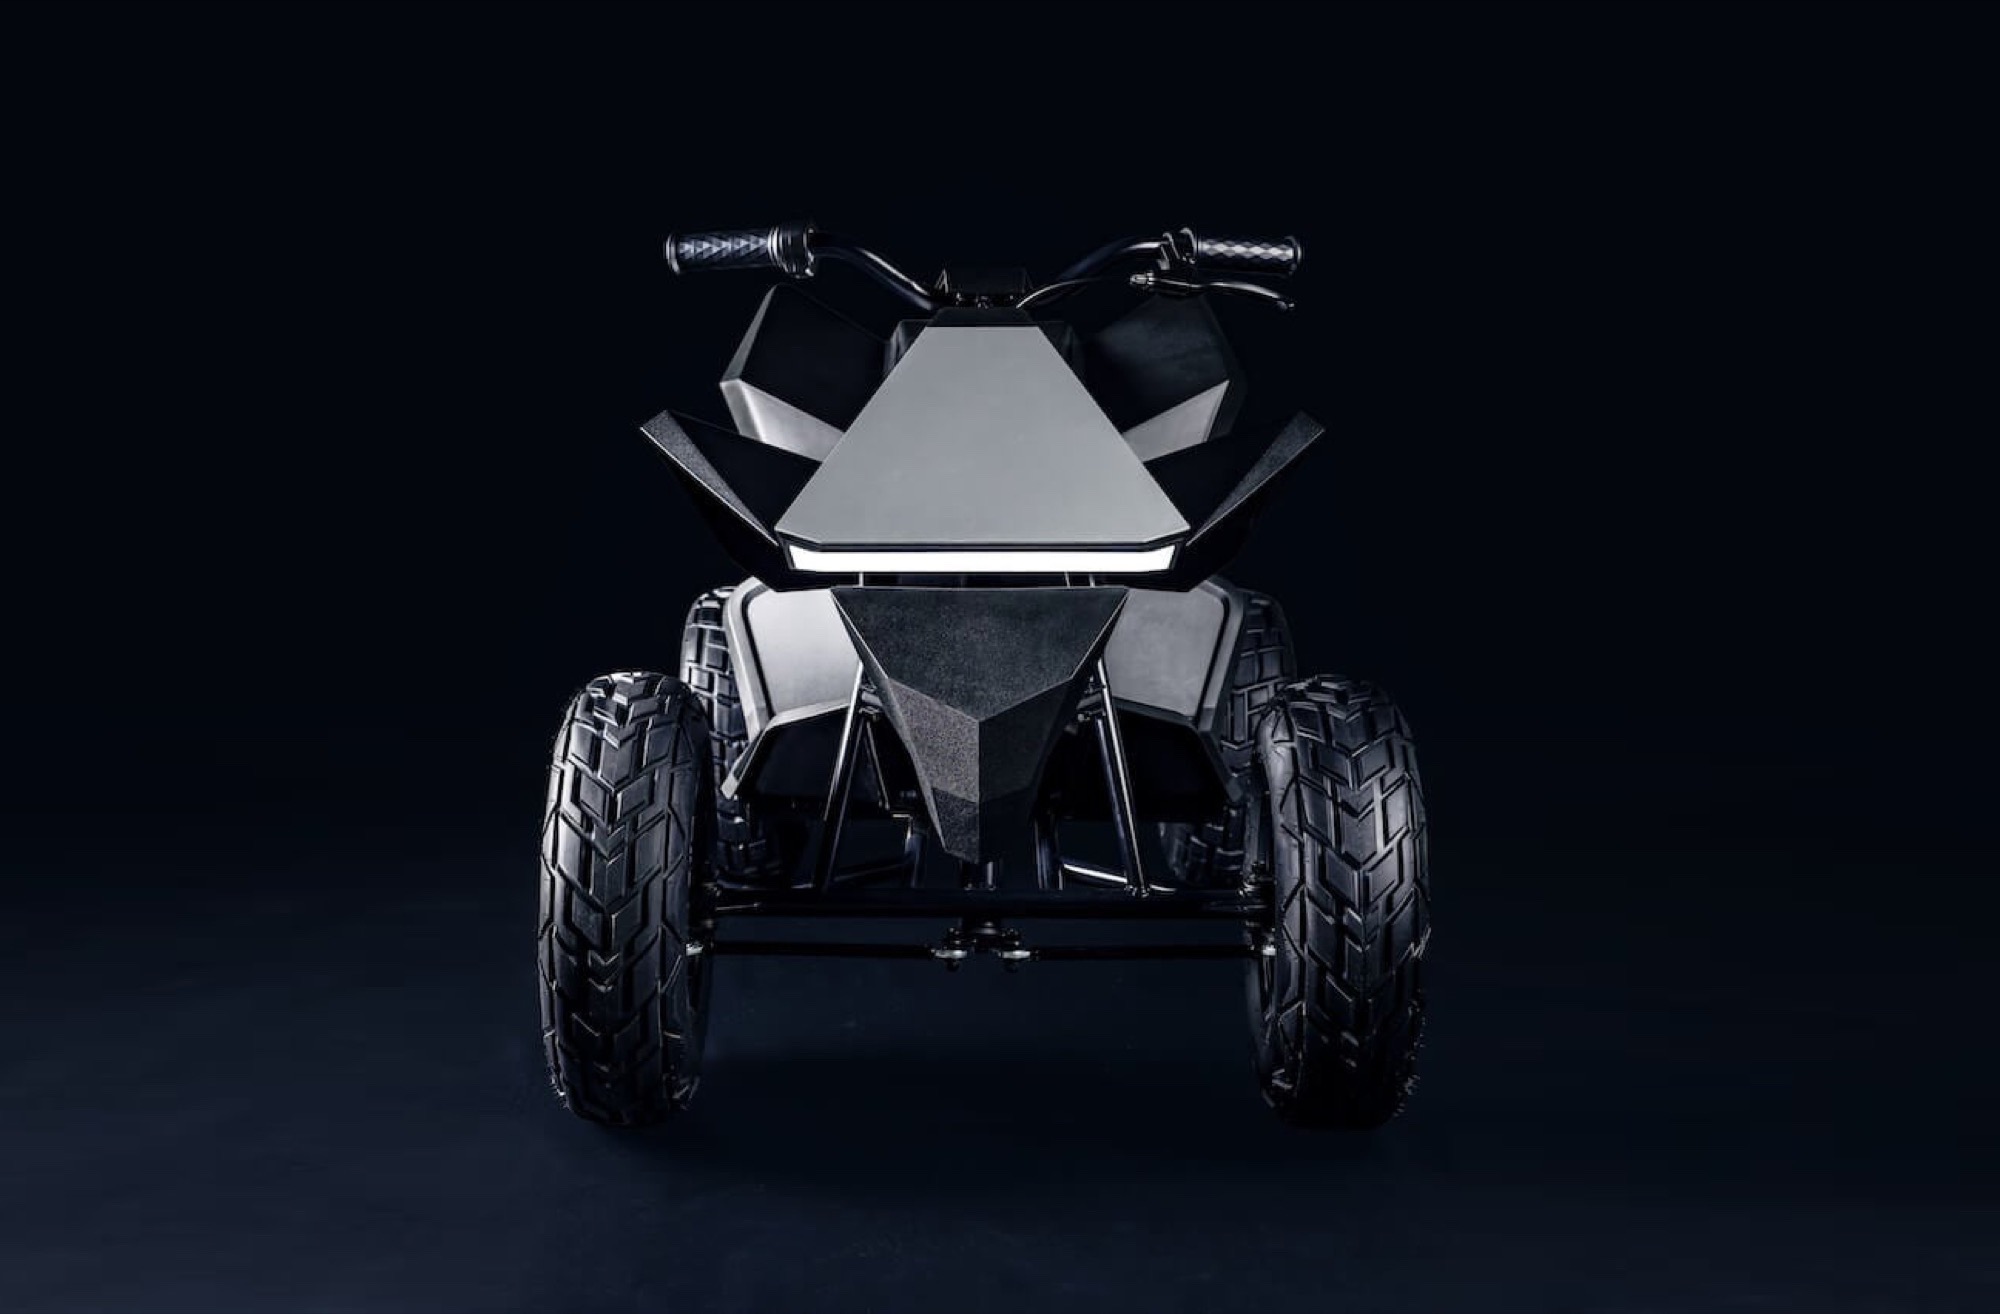 log Aktiv spejl Cyberquad: Tesla presents an electric quad bike with a 10 mph top speed -  NotebookCheck.net News